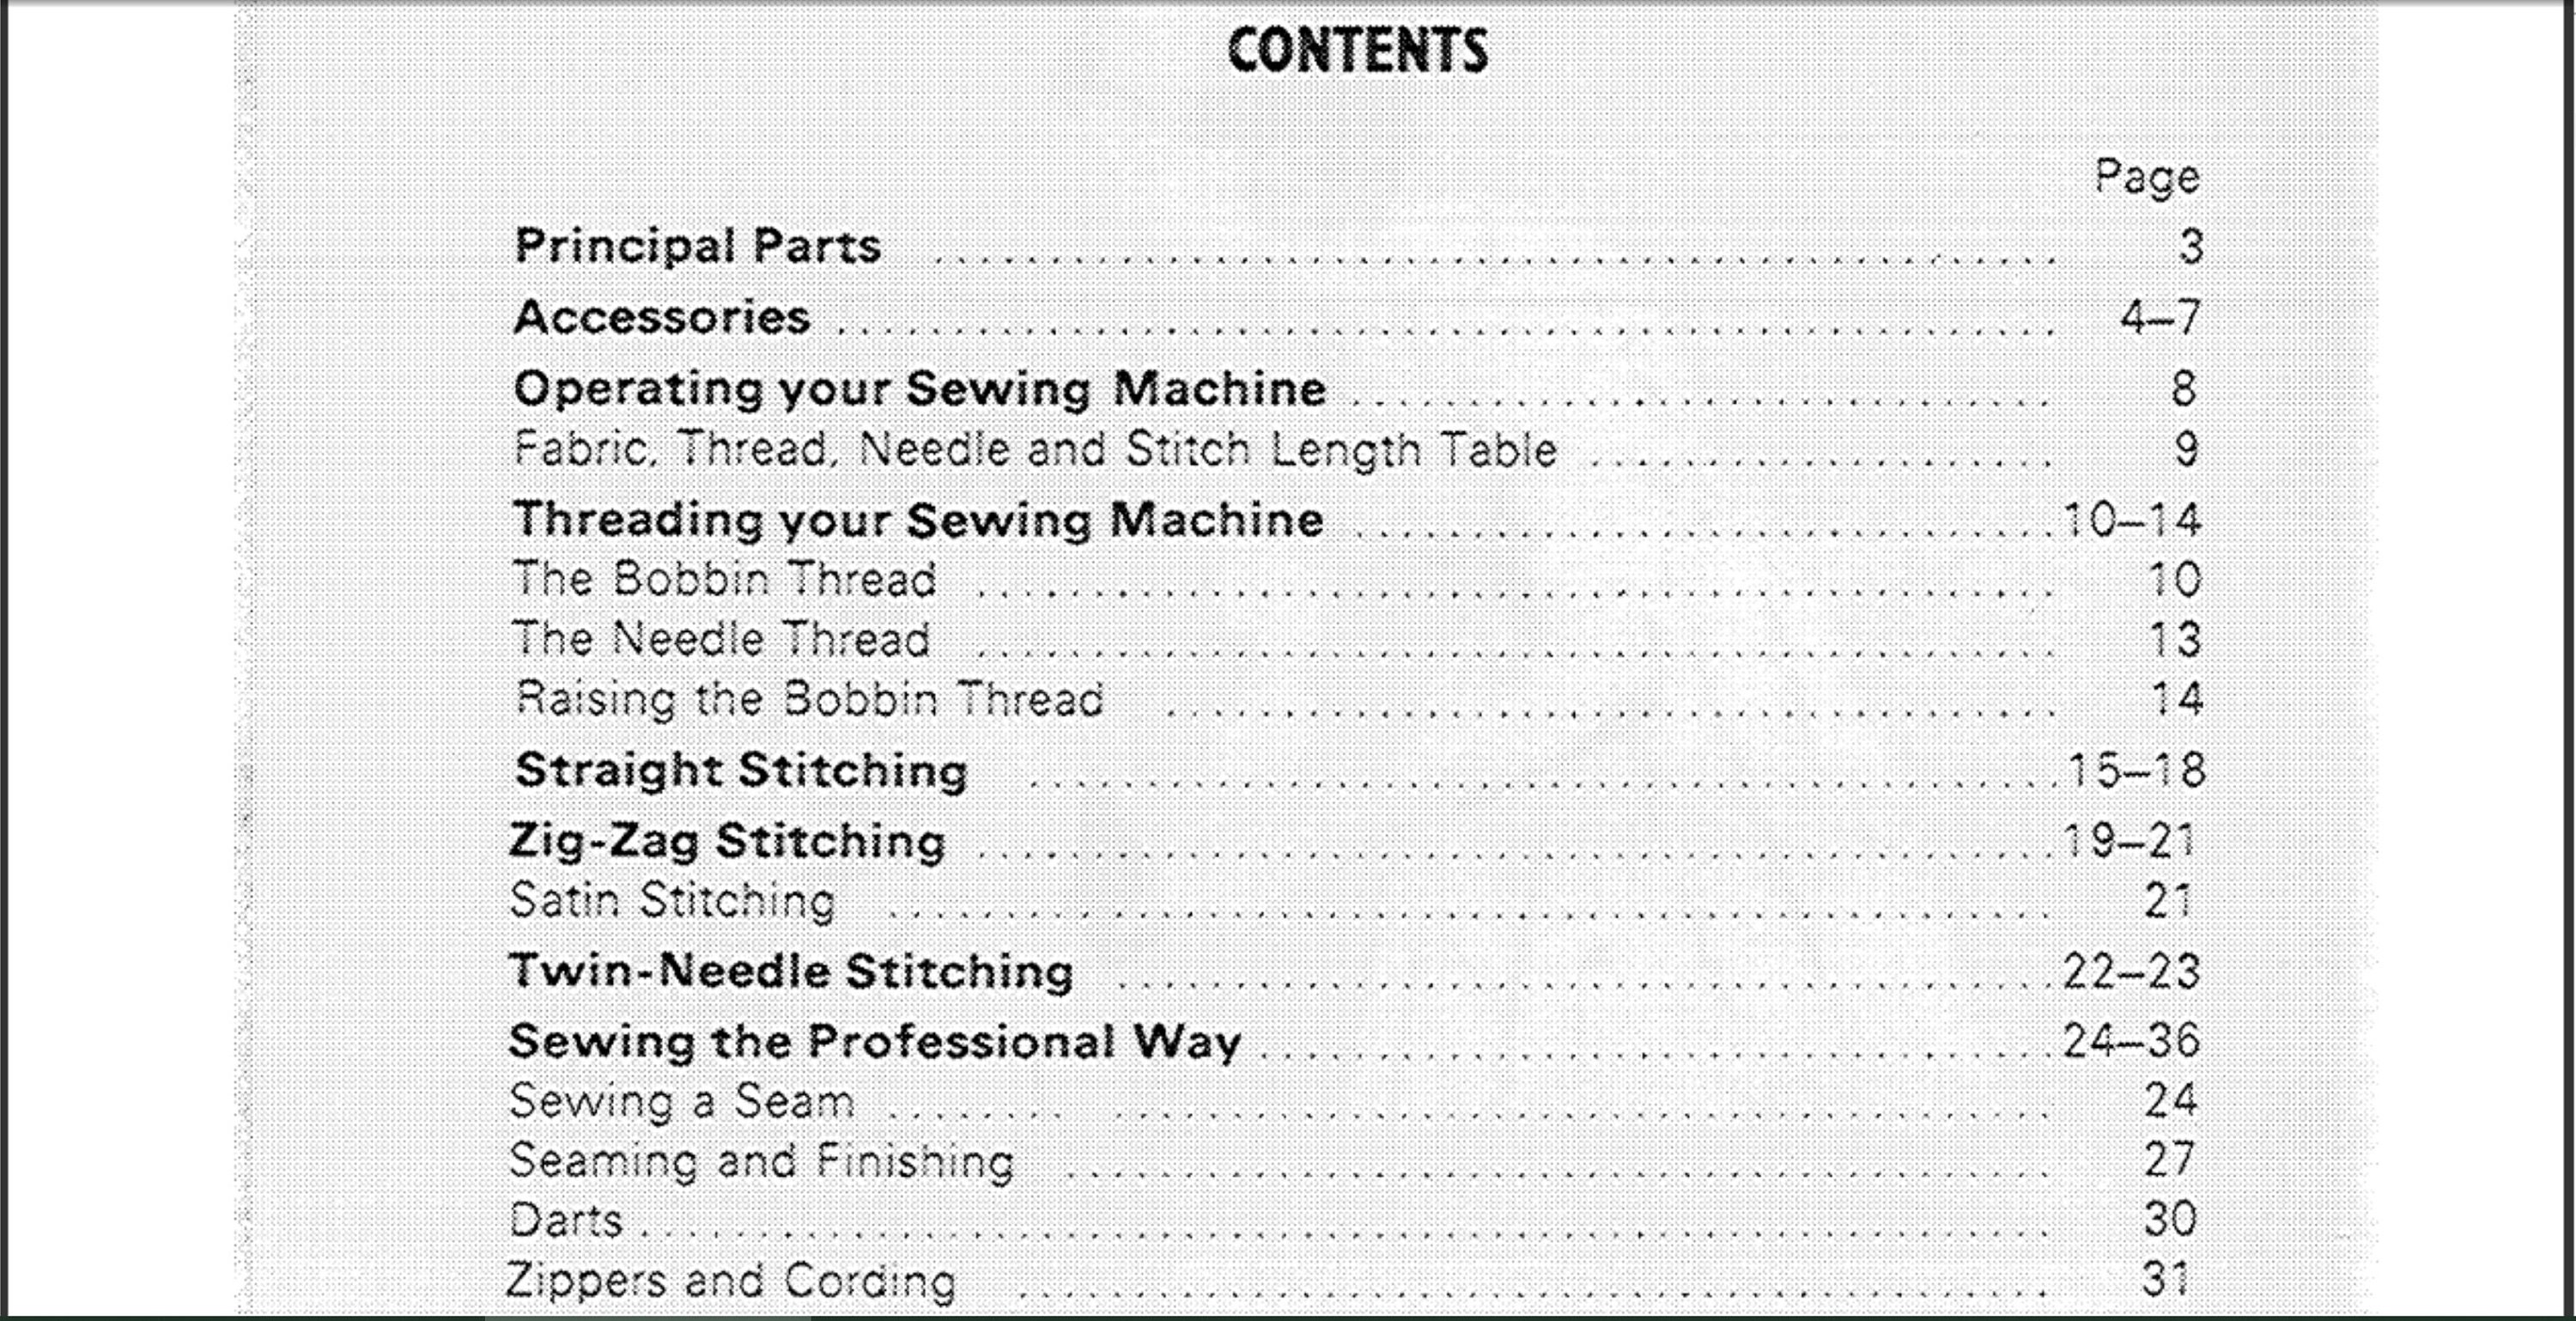 Singer 522 sewing machine owner's manual | Etsy